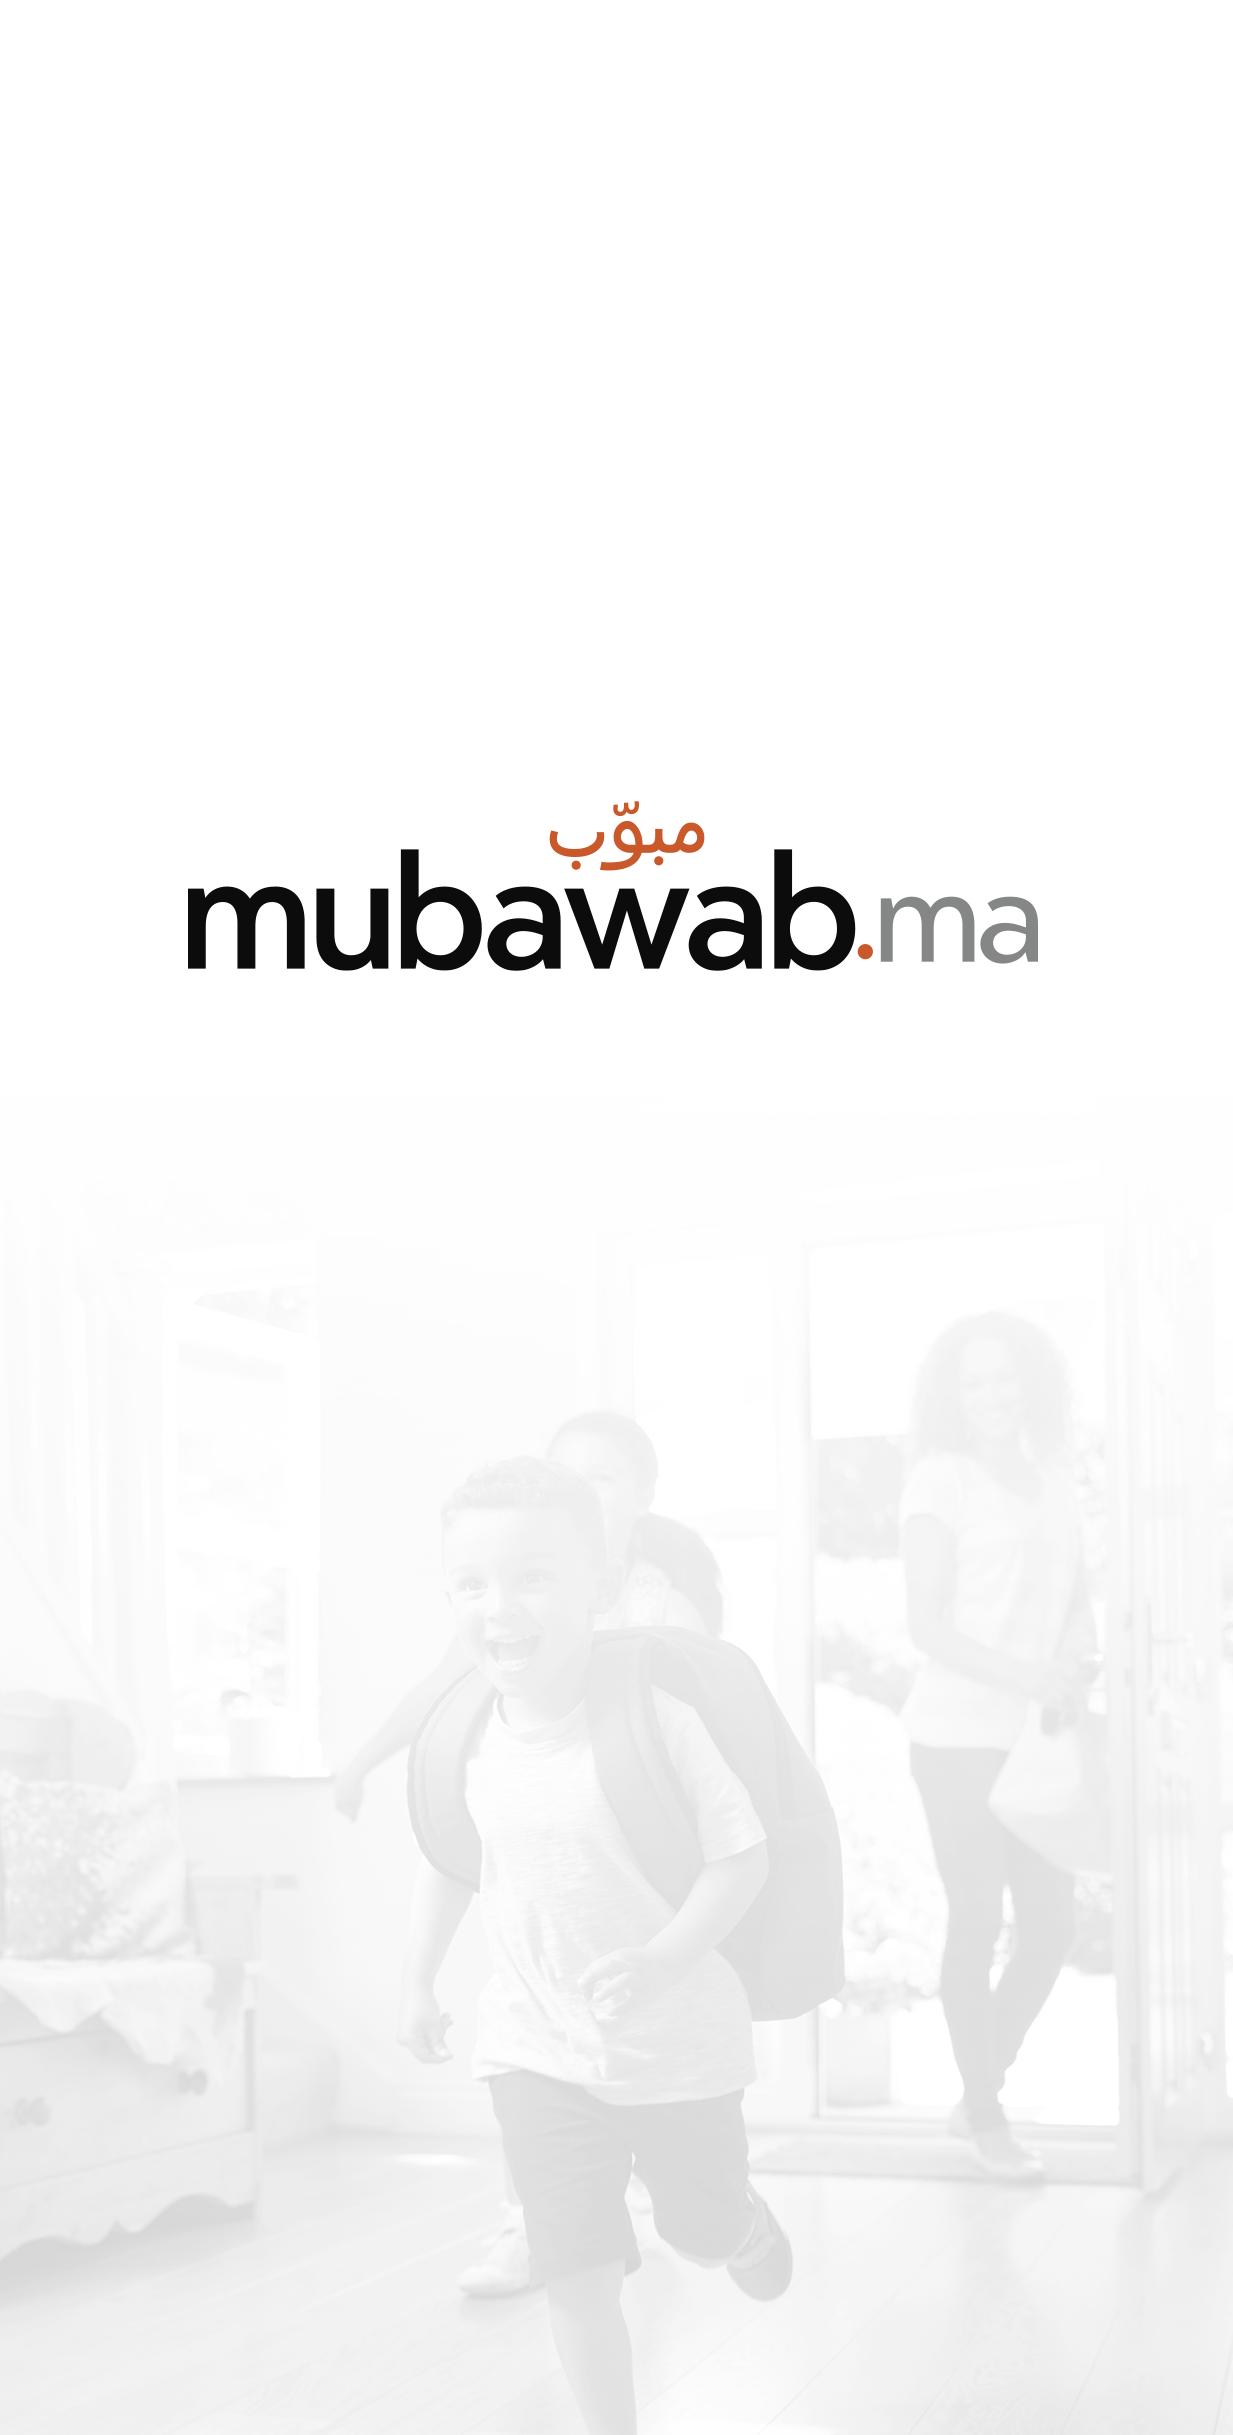 Mubawab - Immobilier au Maroc 12.3.4 Screenshot 1